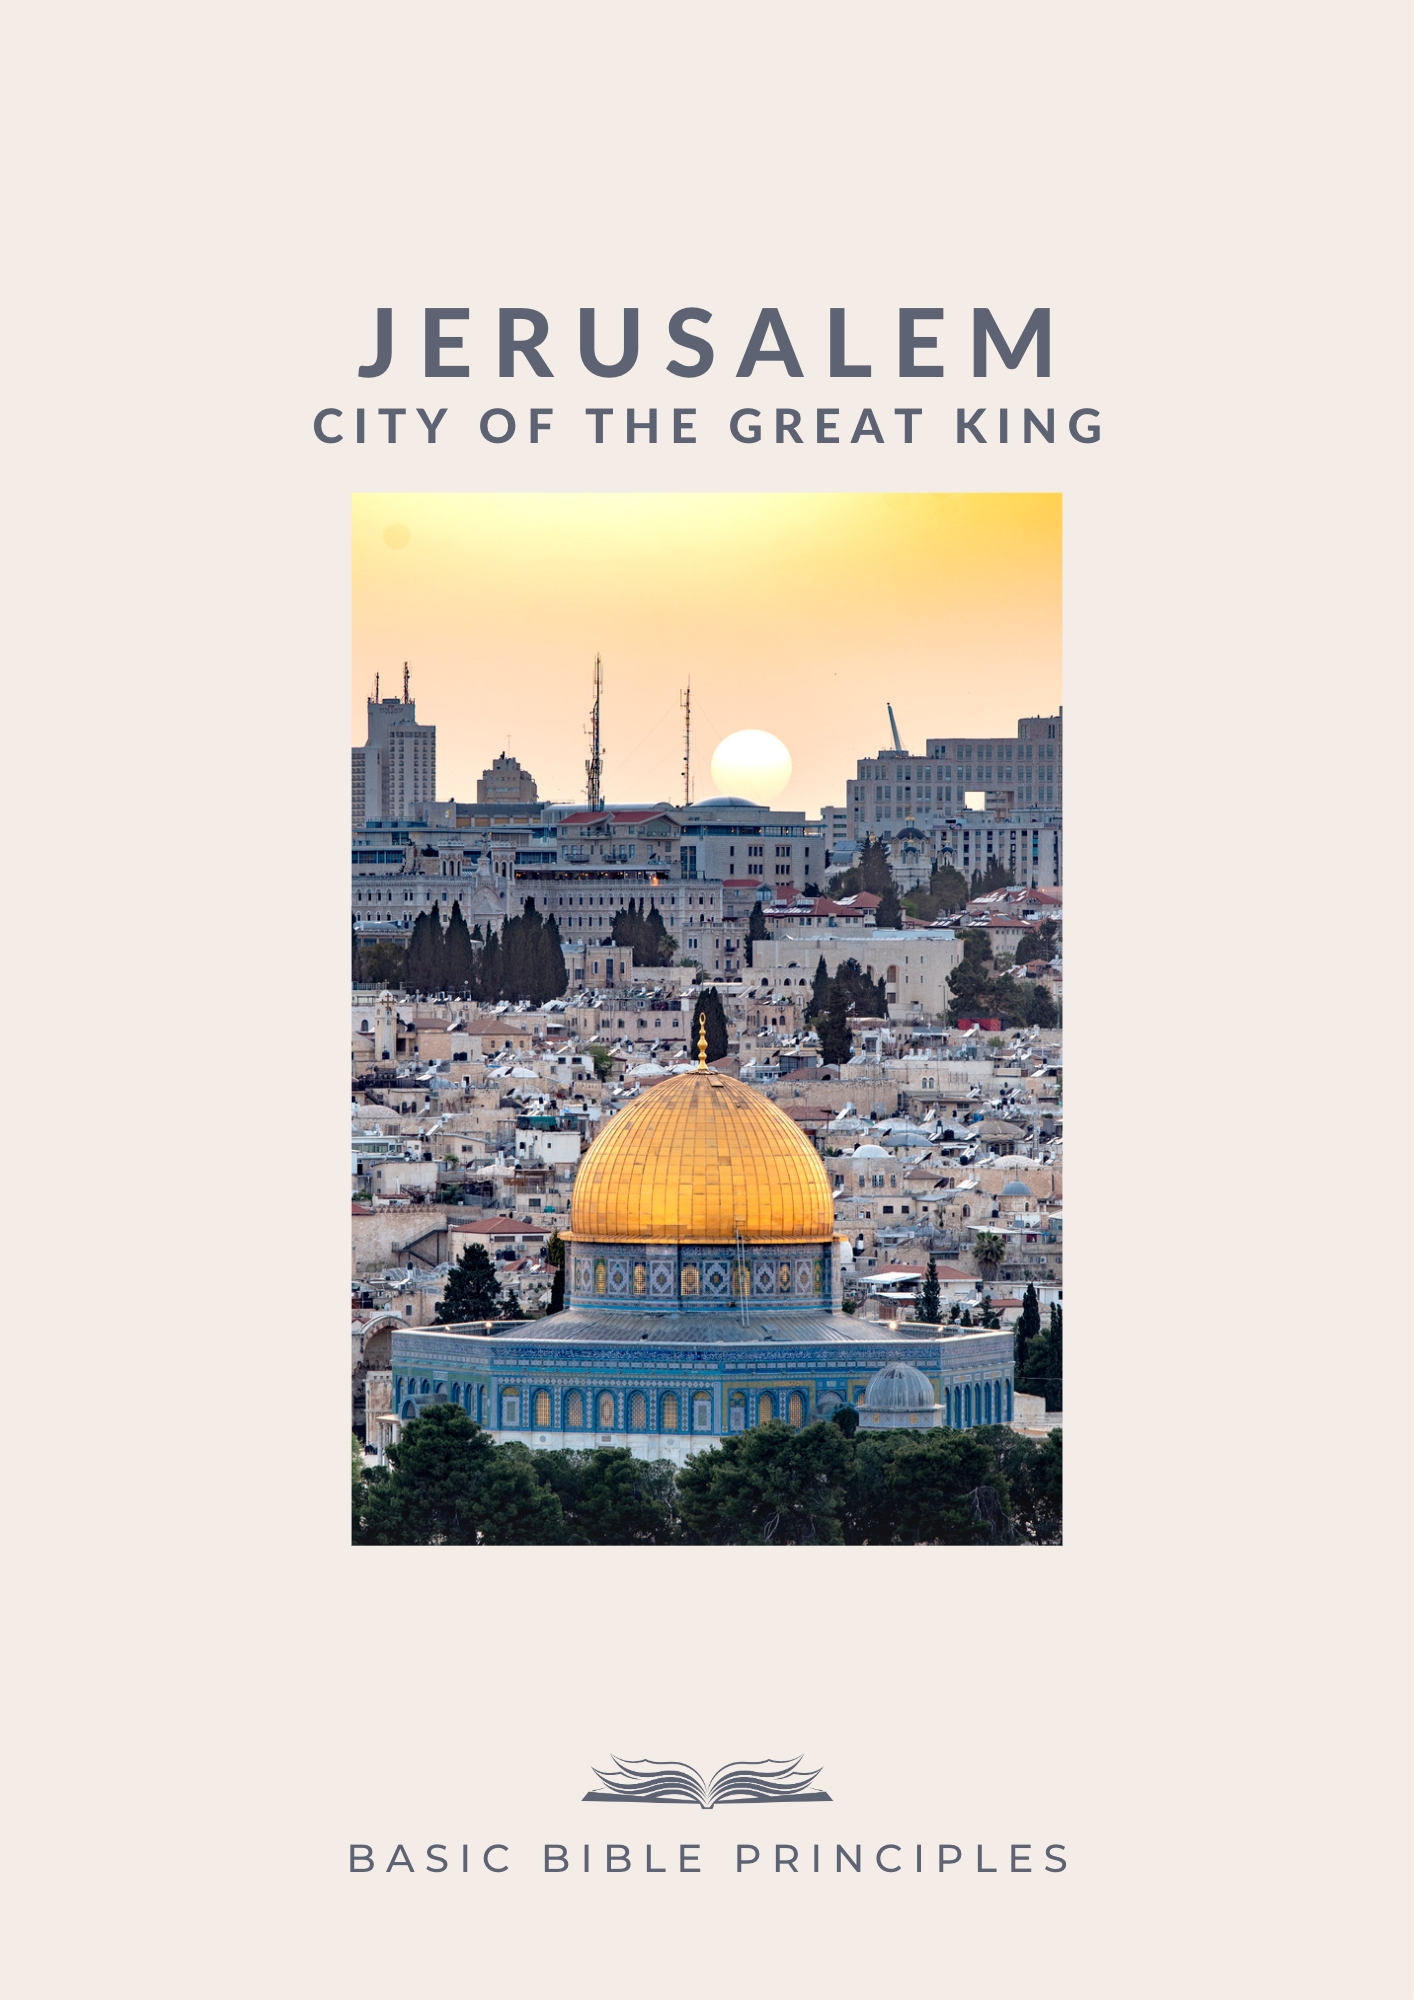 Basic Bible Principles: JERUSALEM, CITY OF THE GREAT KING